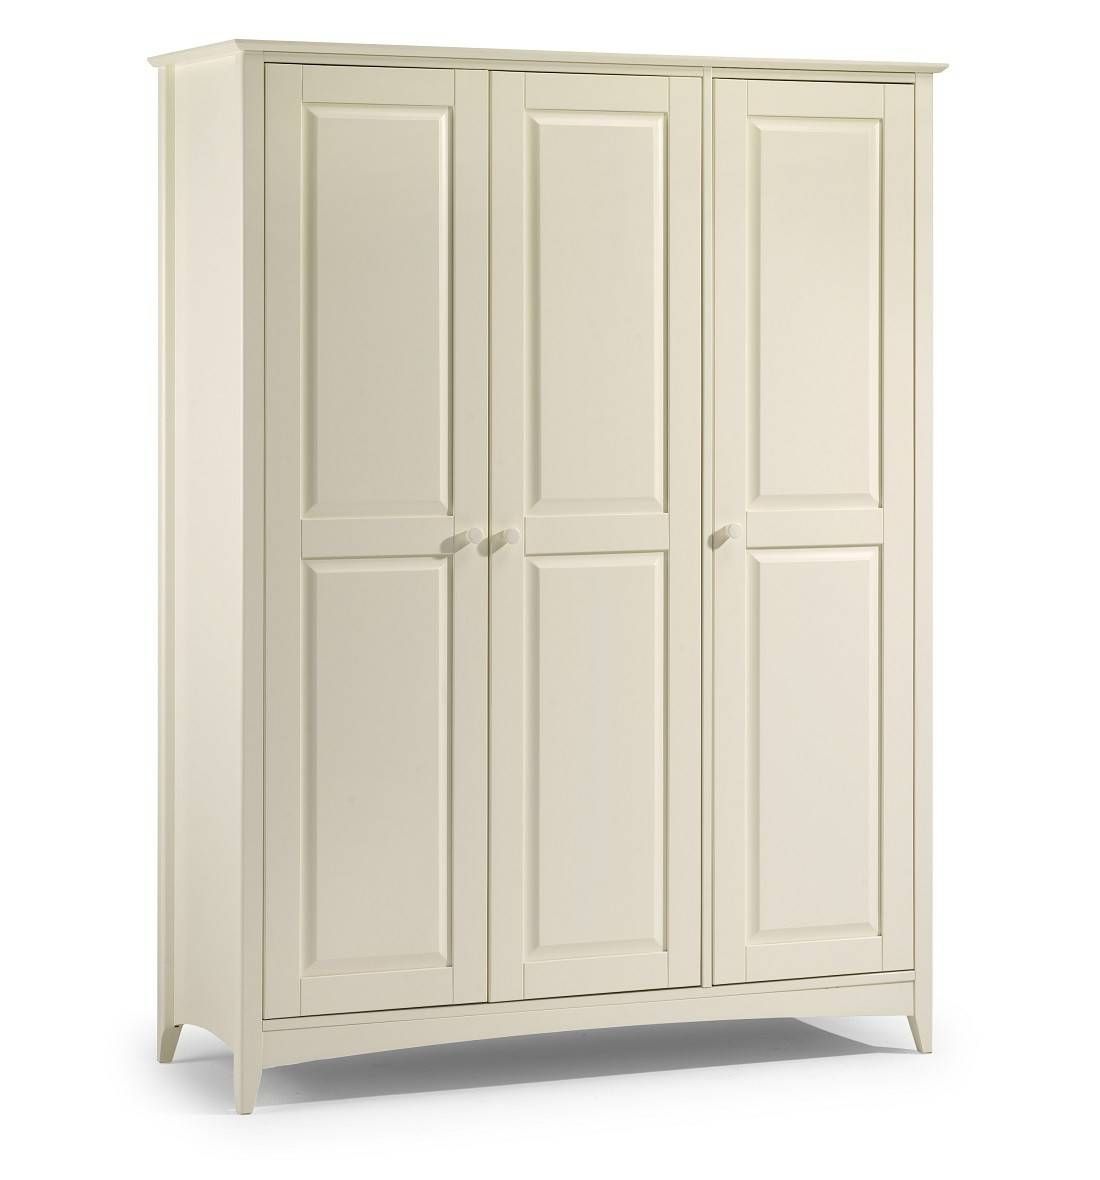 Aspen White 3 Door Triple Wardrobe | Oak Furniture Uk With Oak And White Wardrobes (View 9 of 15)